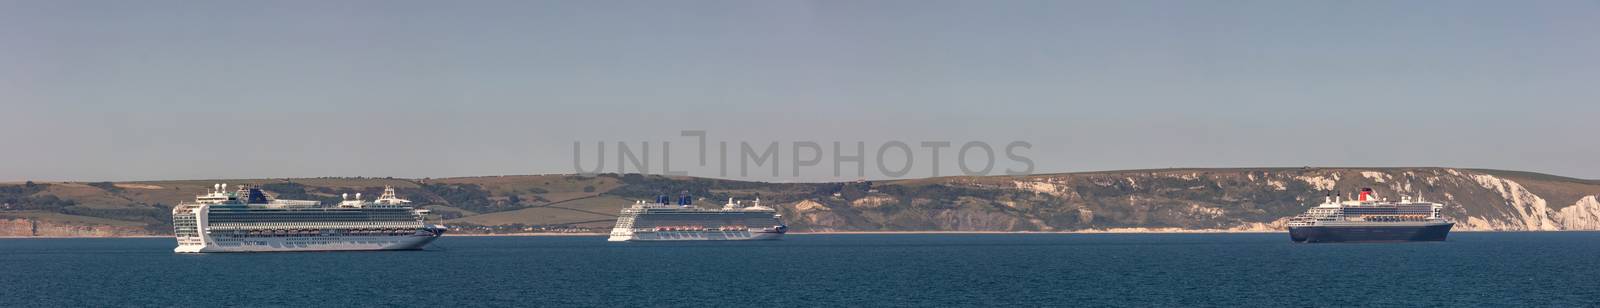 Azura, Britannia, Queen Mary 2 in Weymouth Bay by DamantisZ